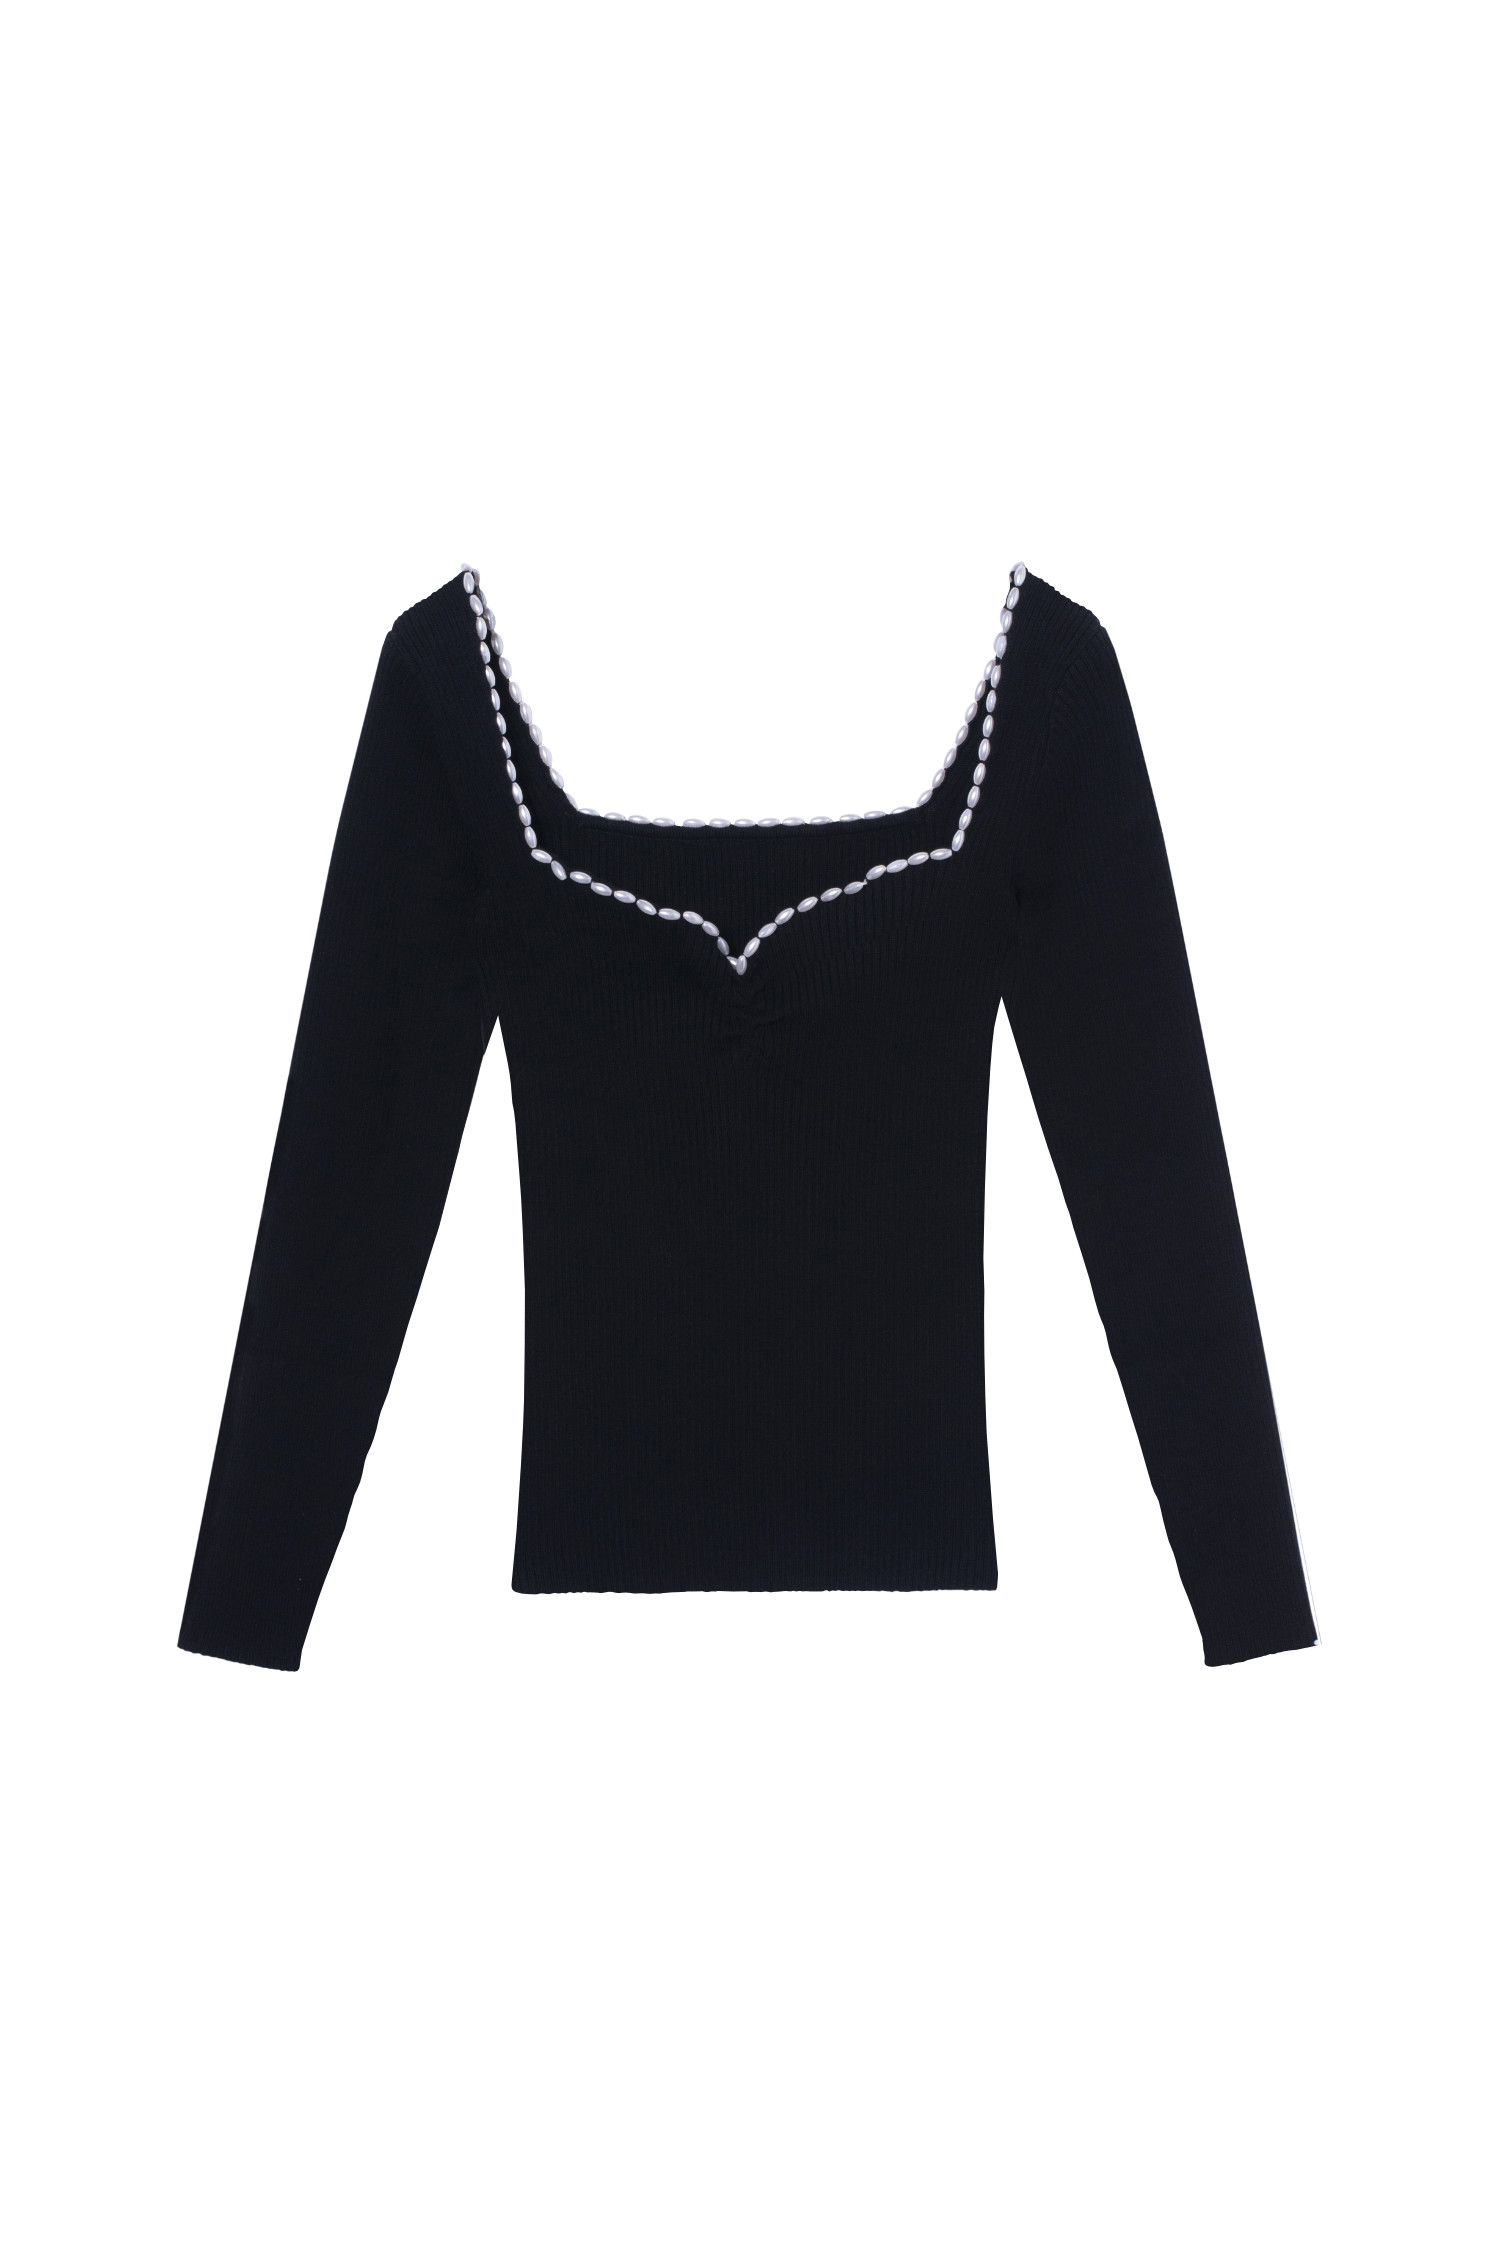 Musier Paris Black Sweater Top